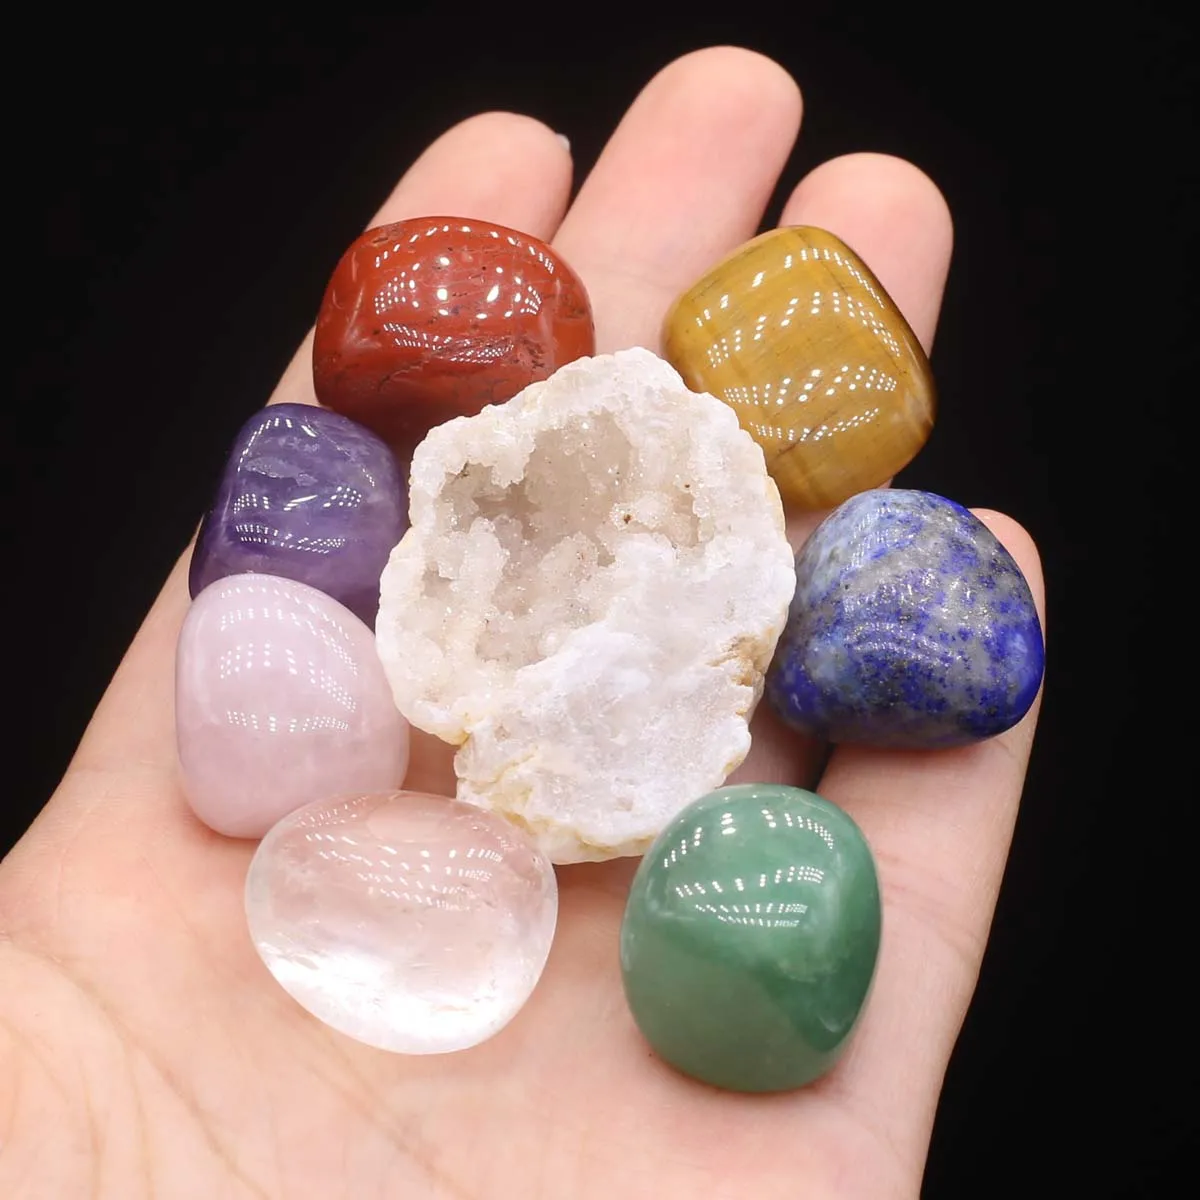 

8pcs/Set Natural Tumbled Stone Amethyst Polishing Healing Crystals Yoga Energy Gemstone Mineral Specimen Ornaments Home Decor